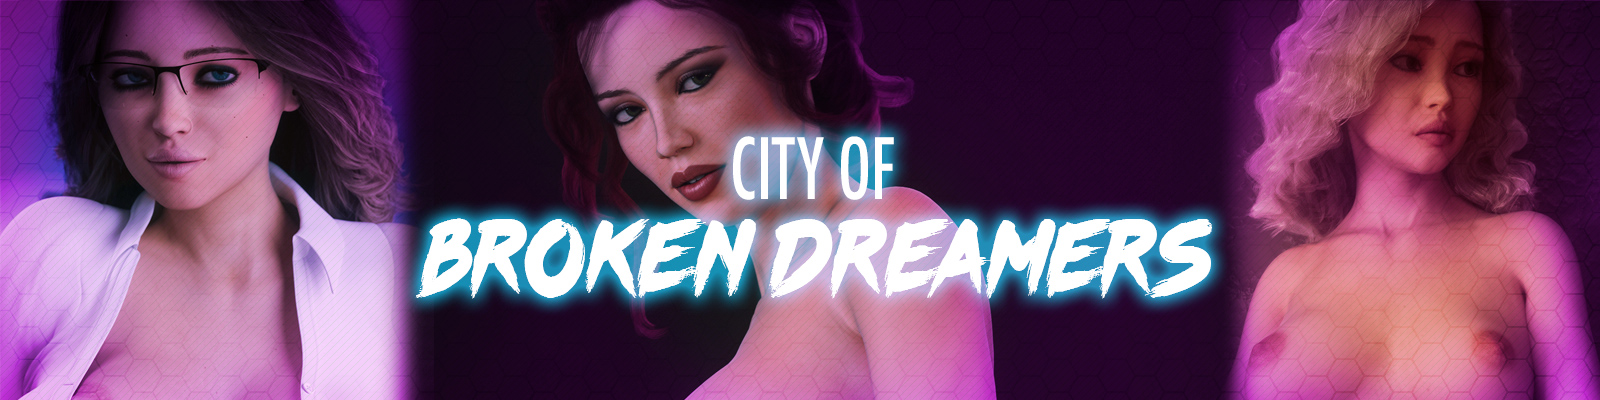 City of Broken Dreamers1.jpg